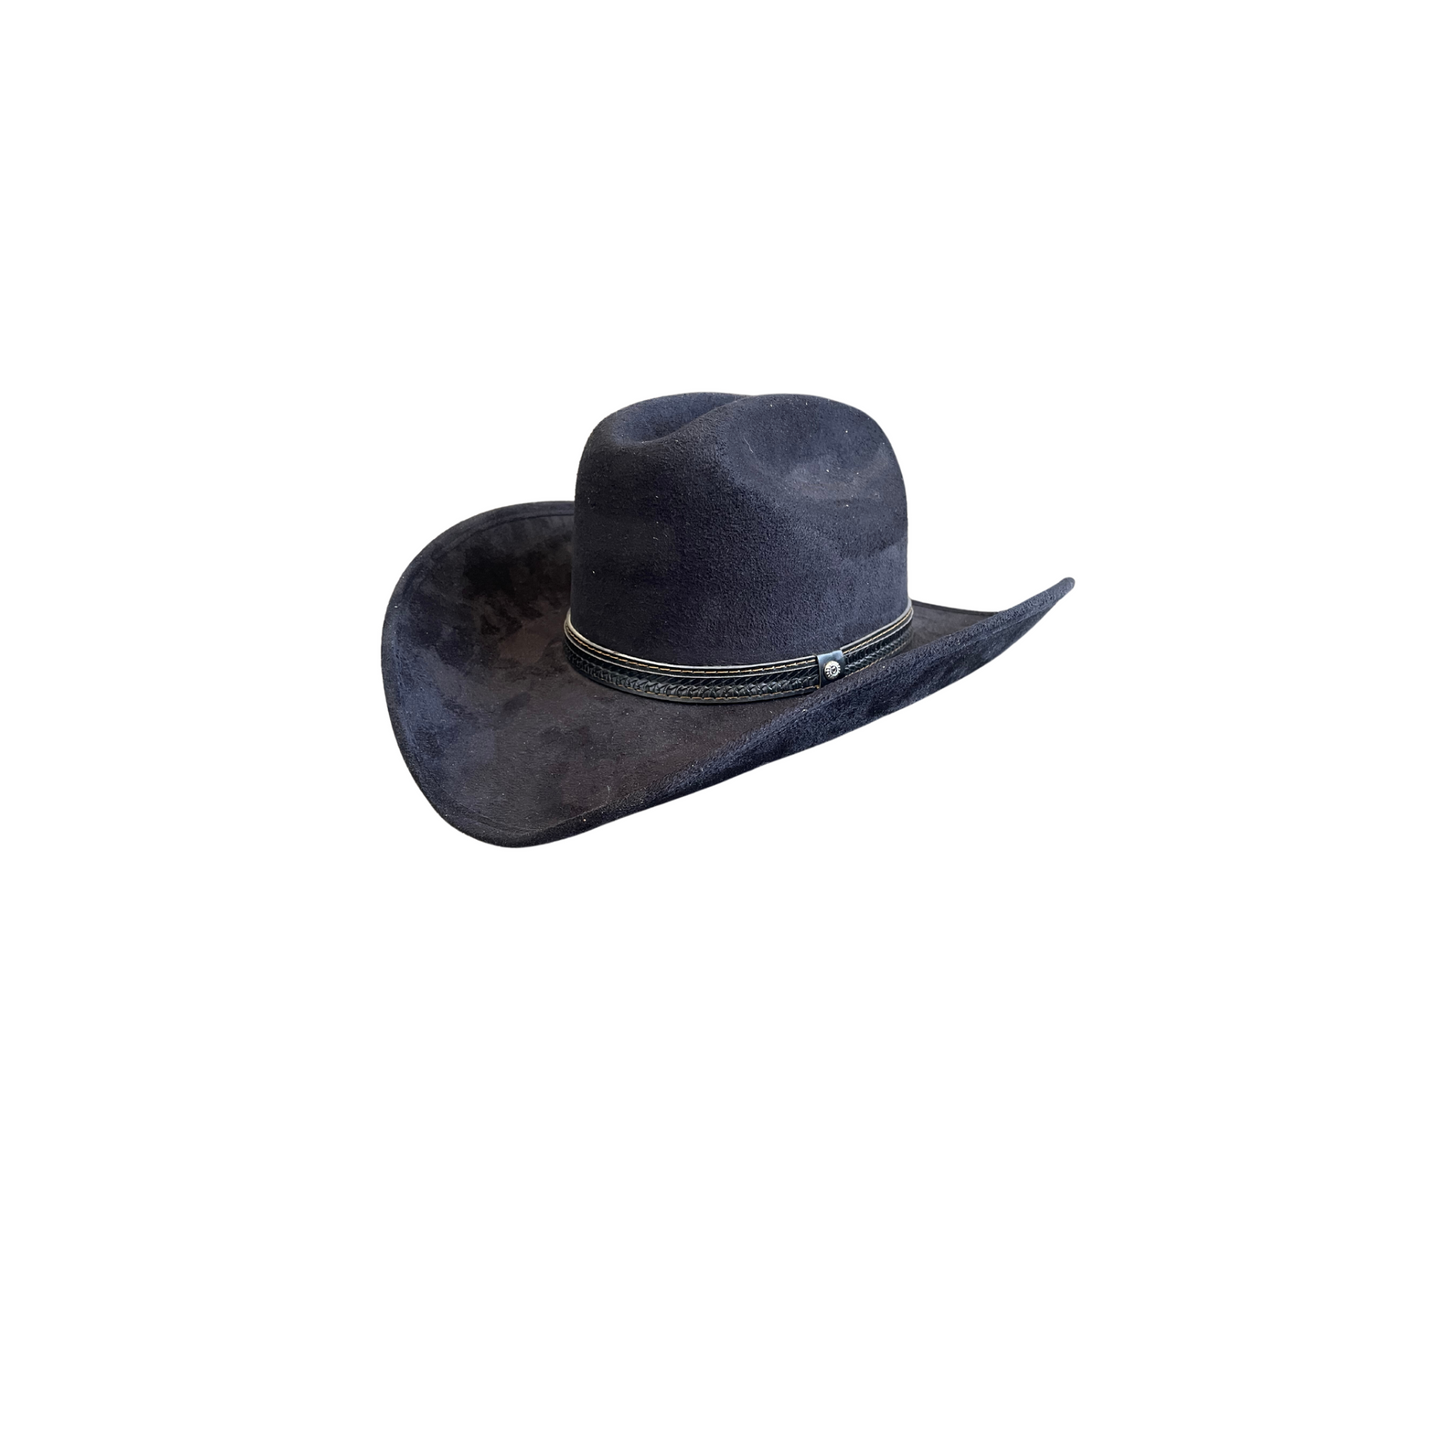 Black Narrow Western Style Hat